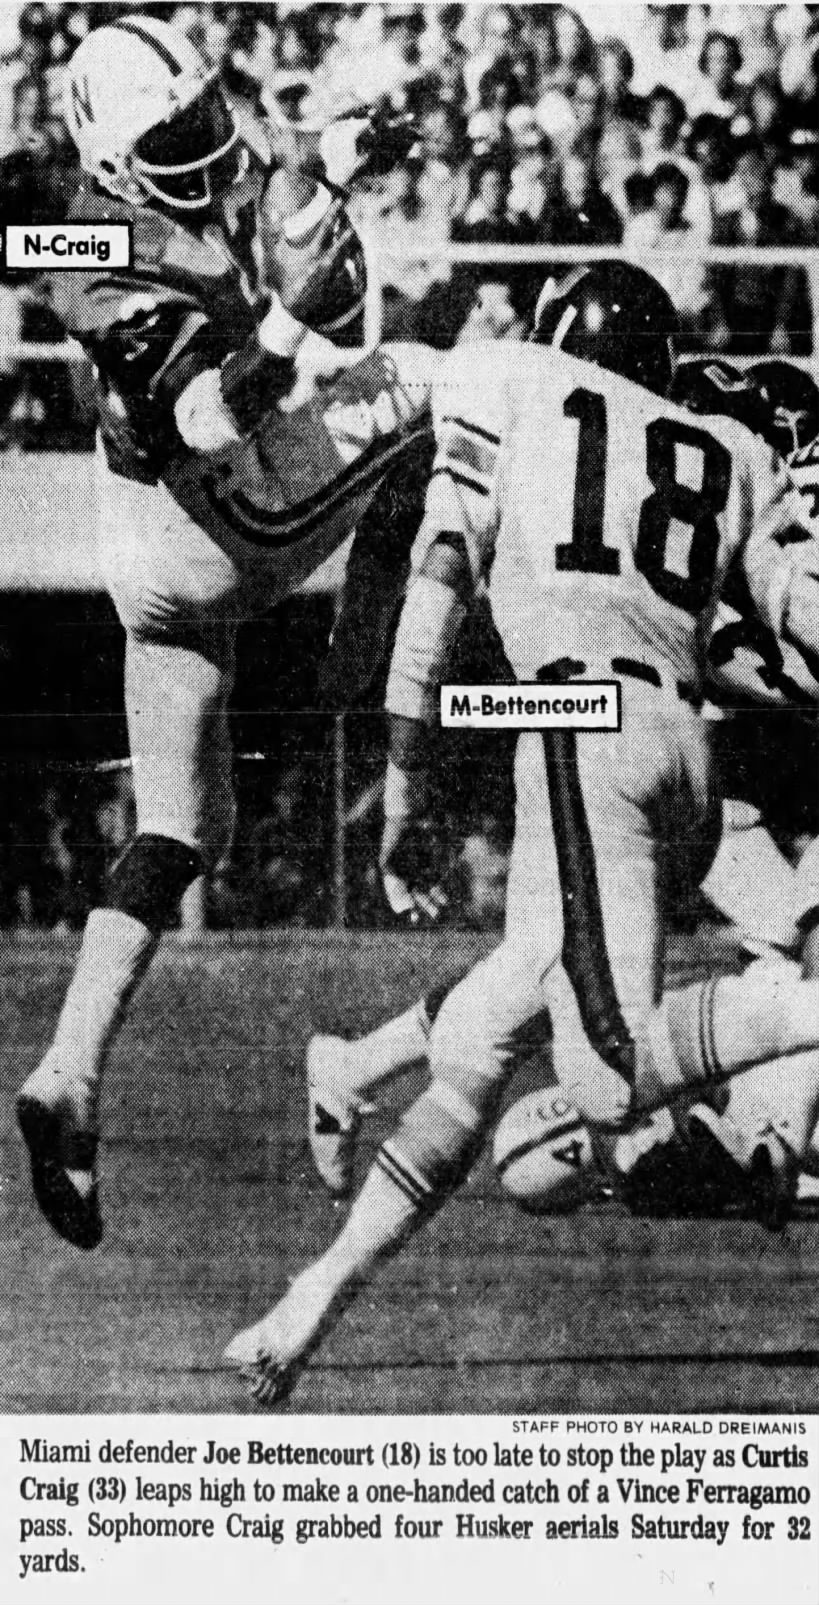 1975 Curtis Craig catch Nebraska vs Miami football